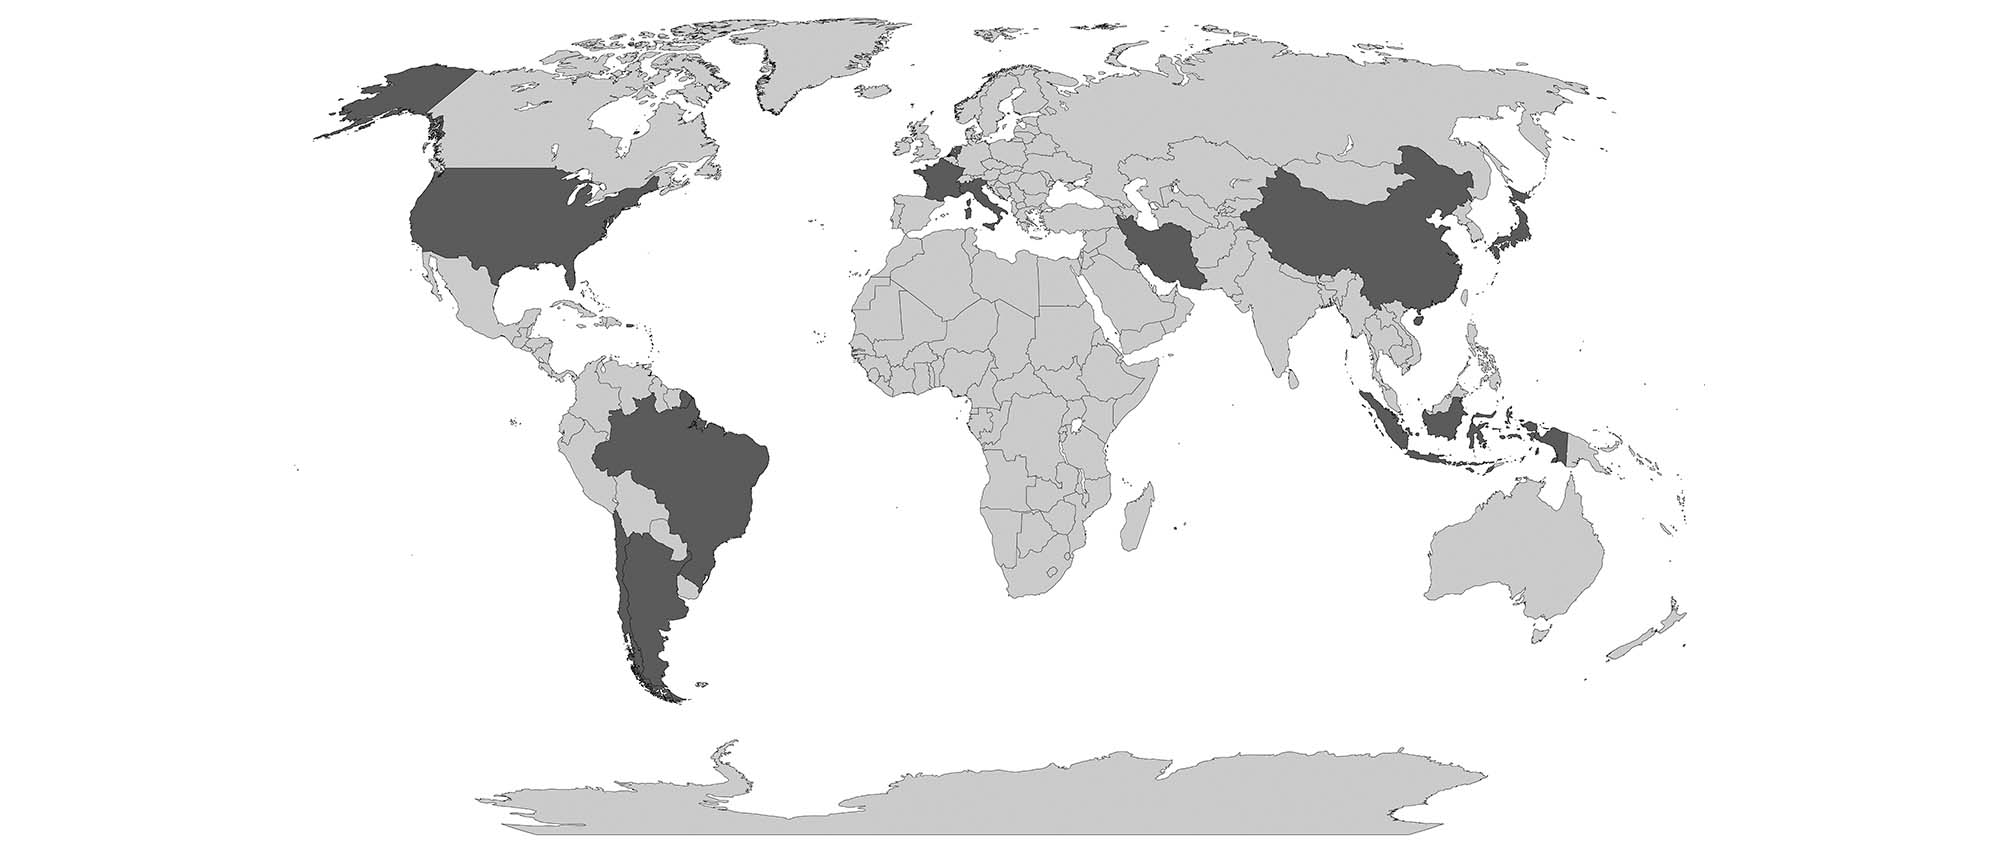 00_WORLD MAP.jpg